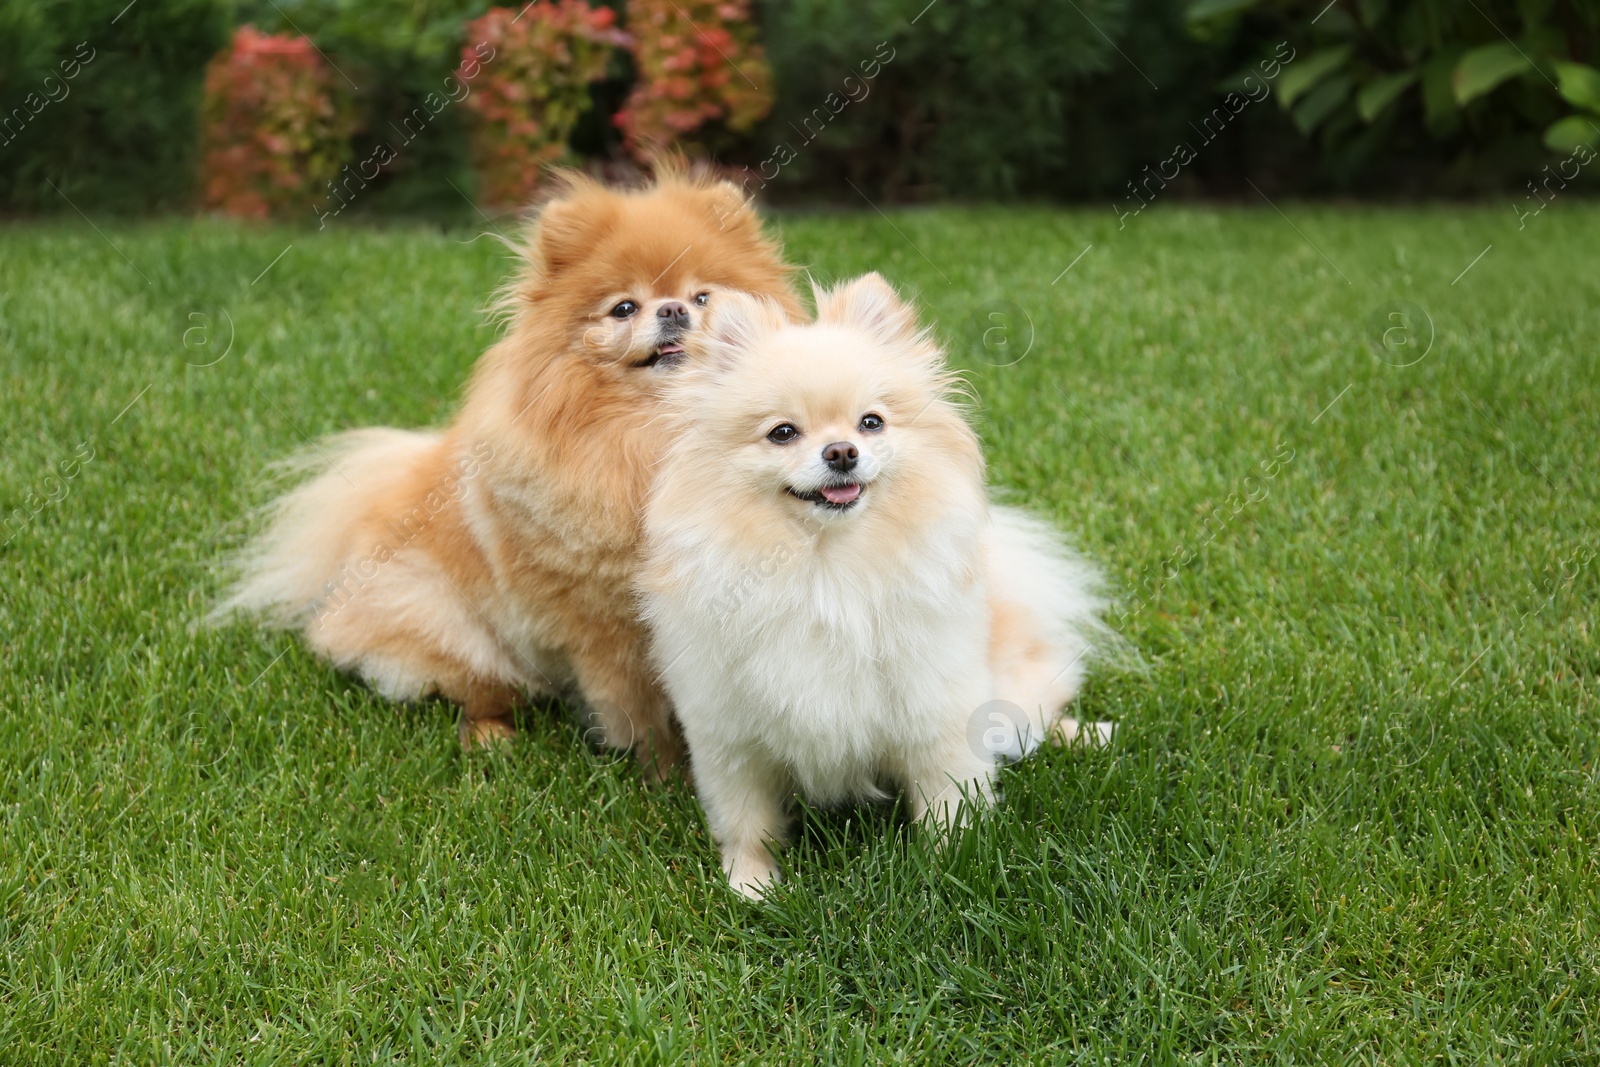 Photo of Cute Pomeranians on green grass outdoors. Dog walking